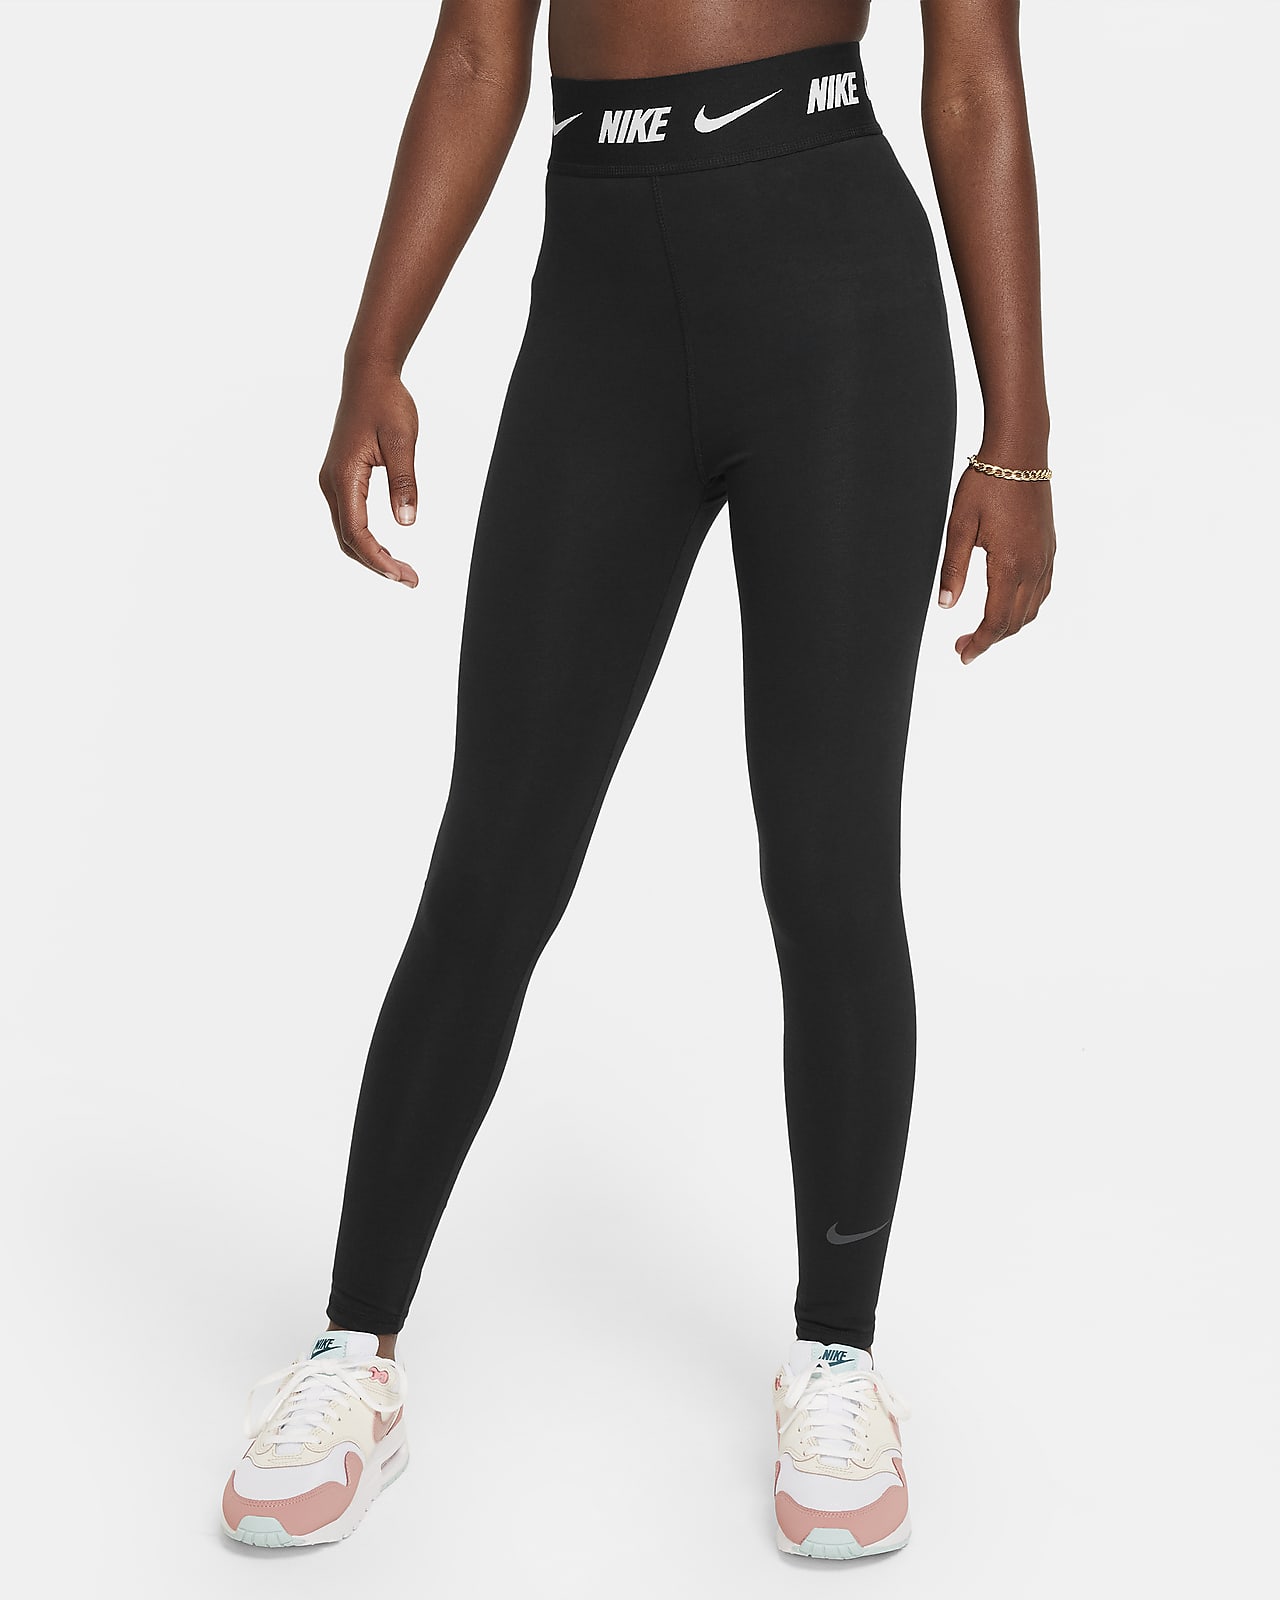 Legging taille haute Nike Sportswear Favorites pour ado (fille)